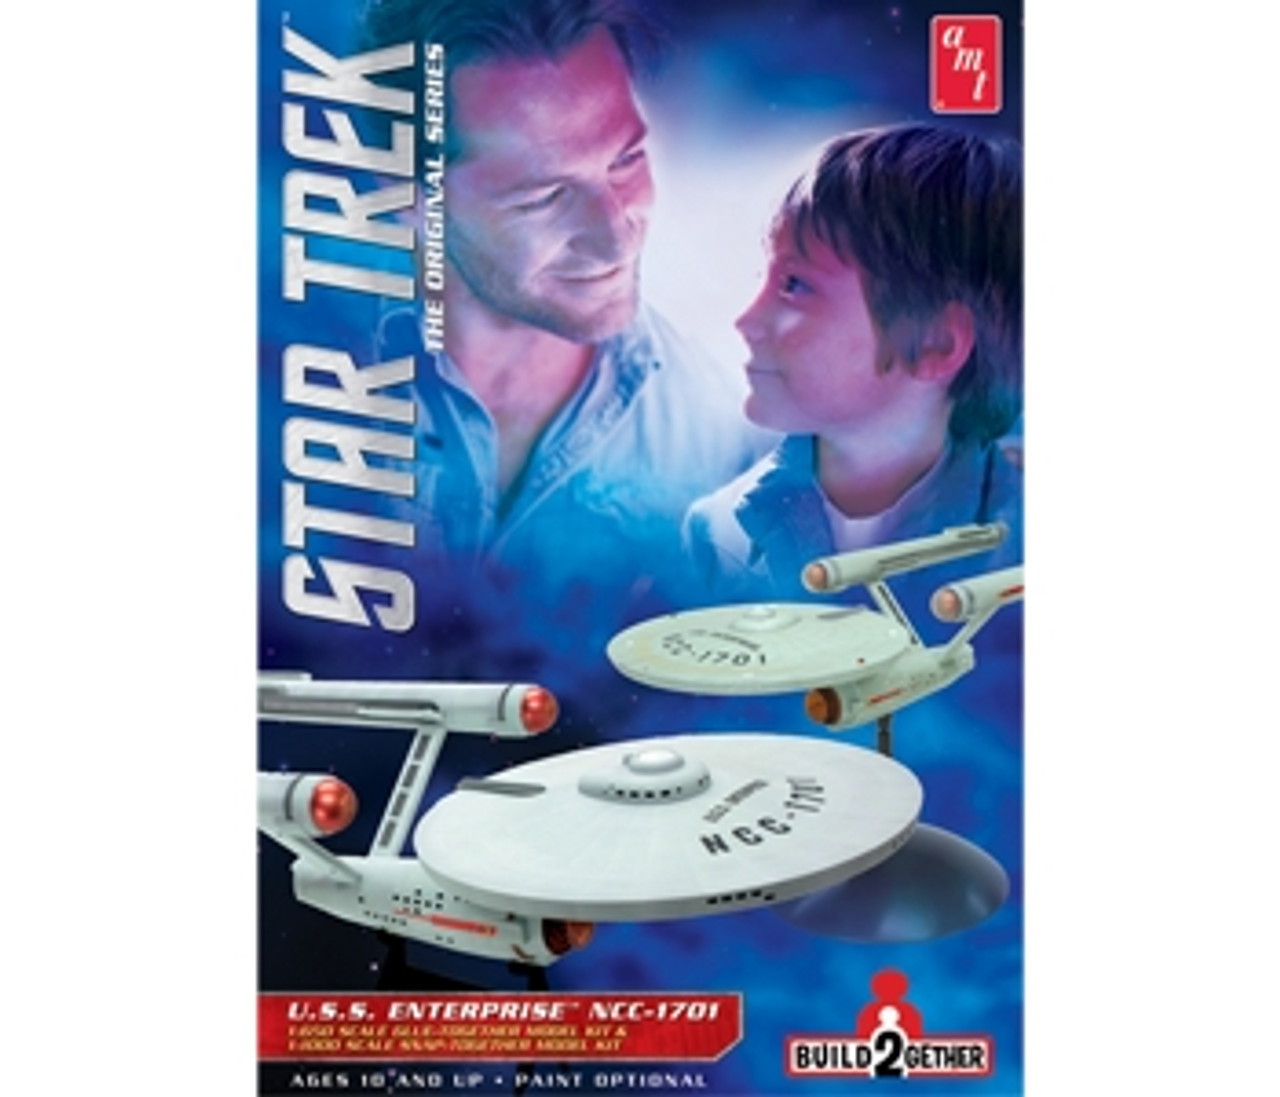 AMT 913 Star Trek U.S.S Enterprise Build 2 Gether Plastic Model Kit